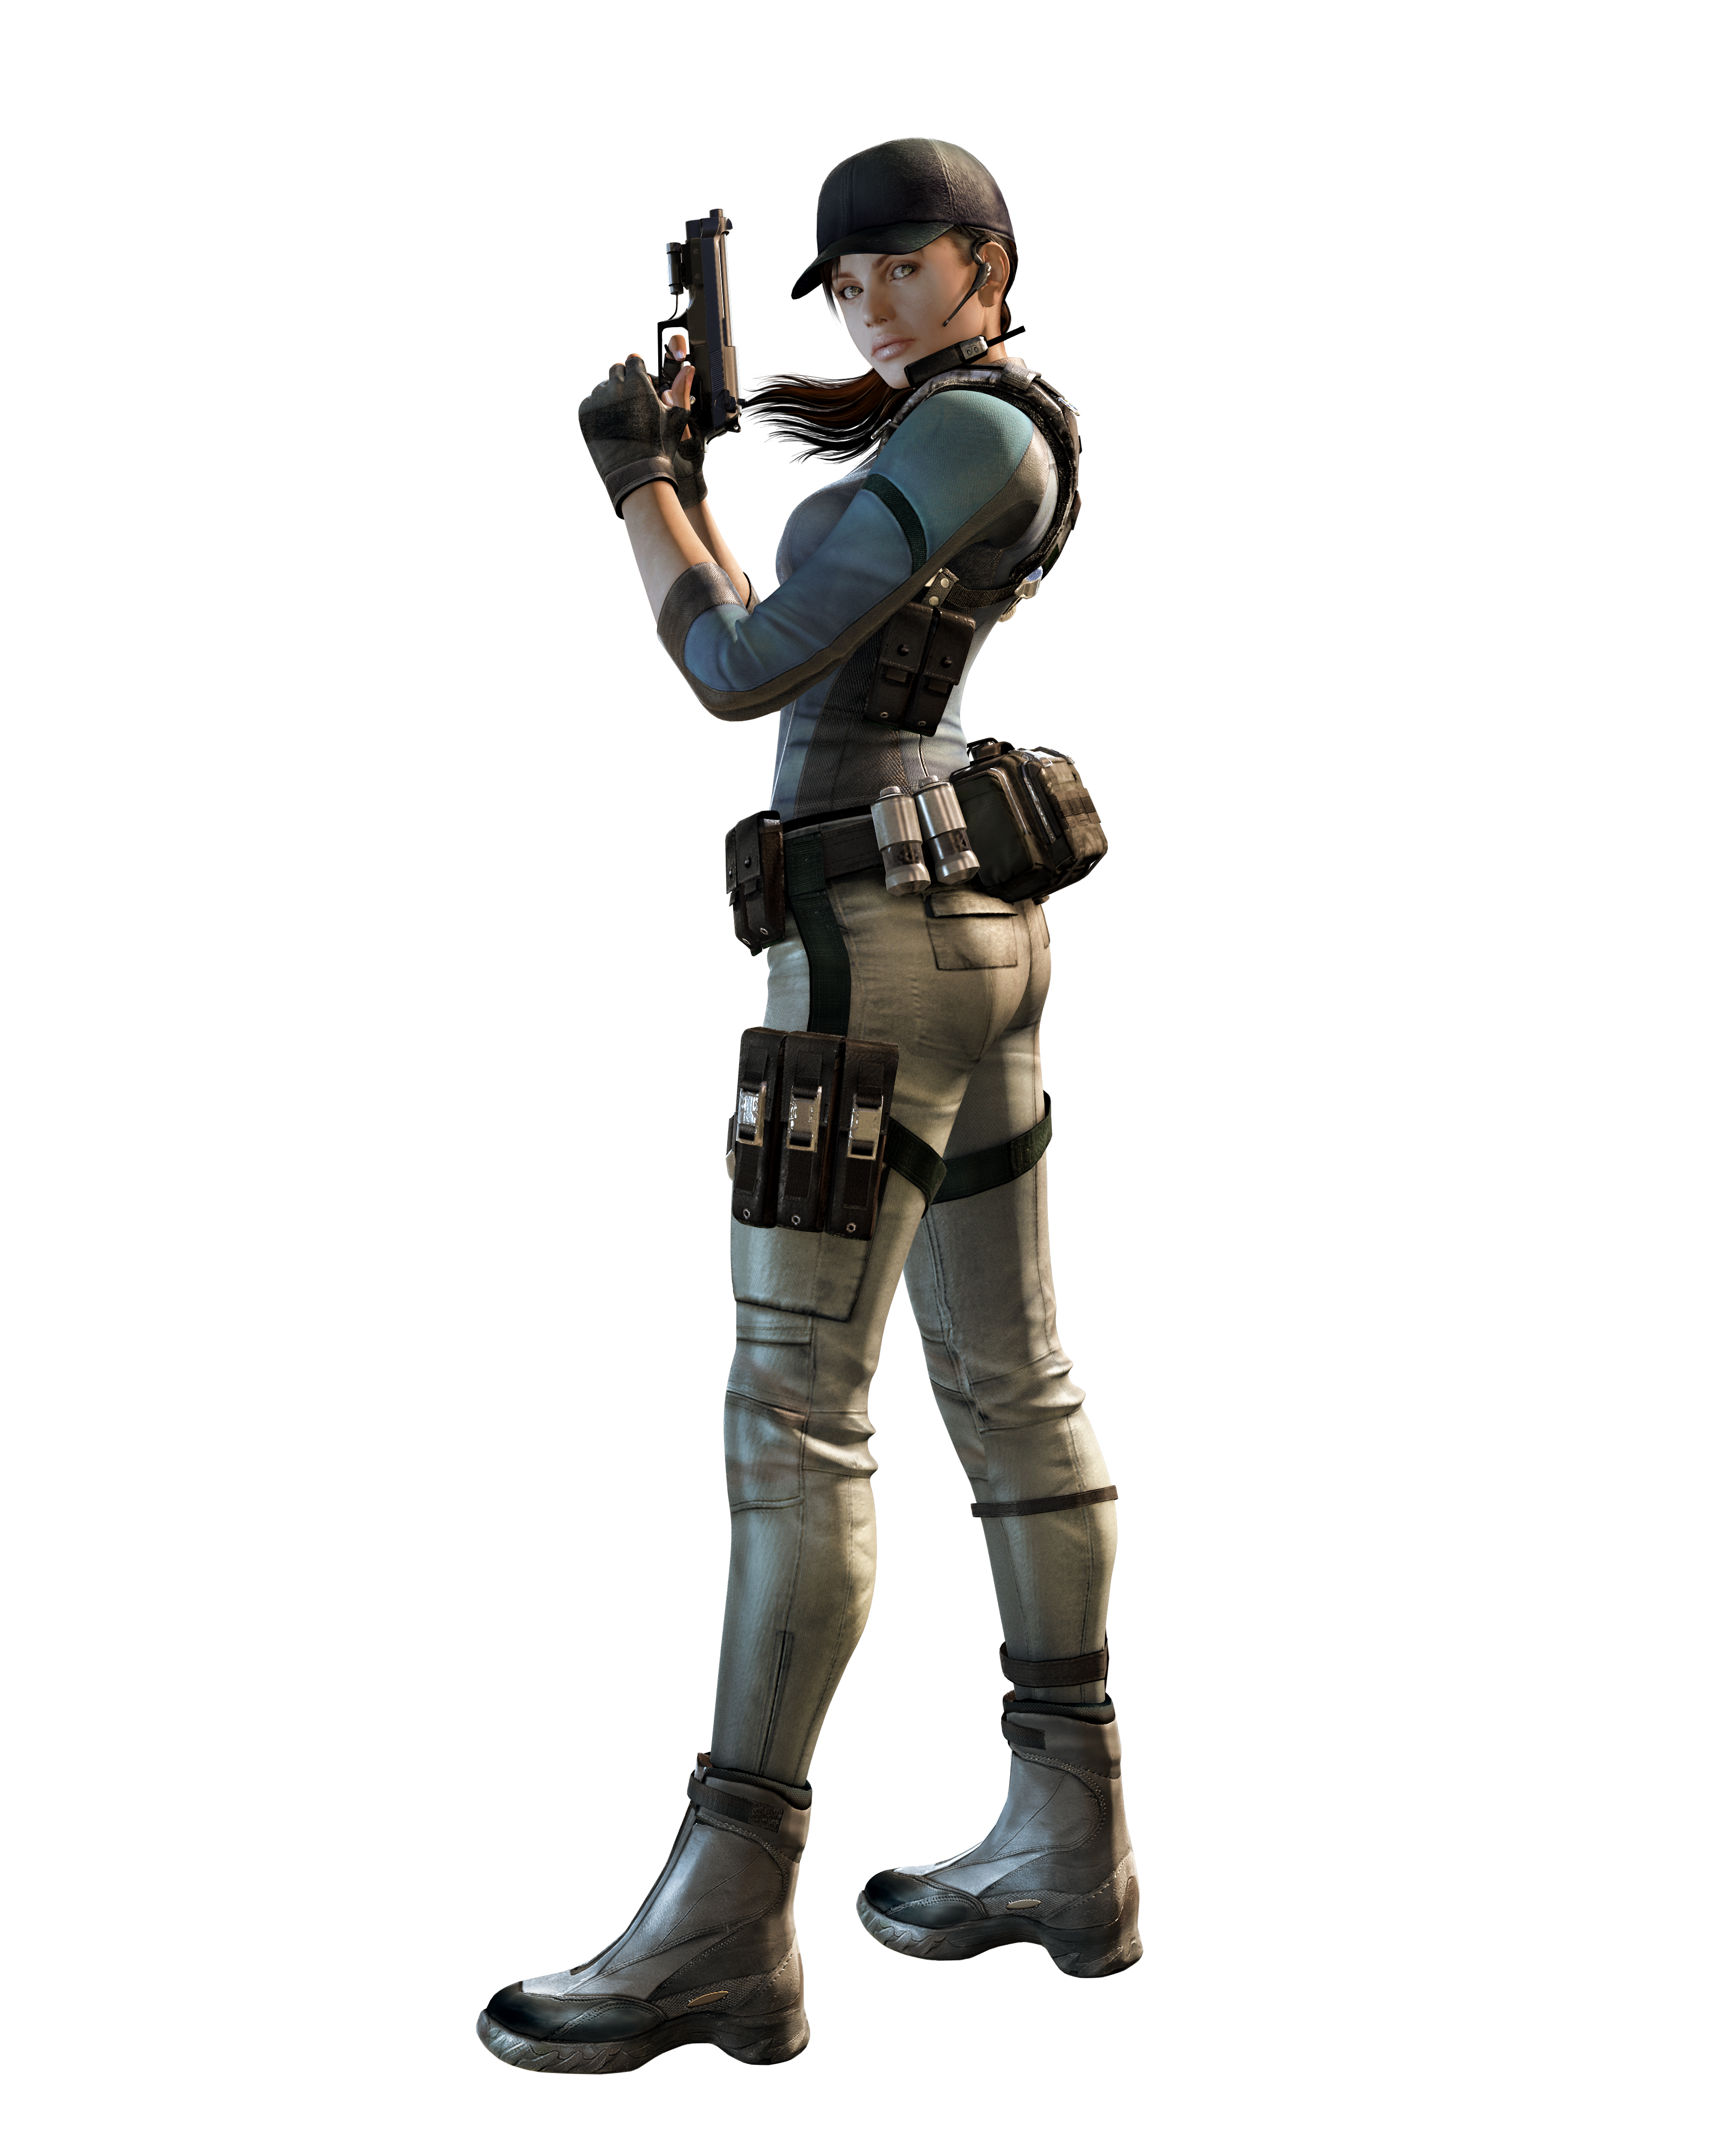 Resident Evil: The Mercenaries 3D Picture